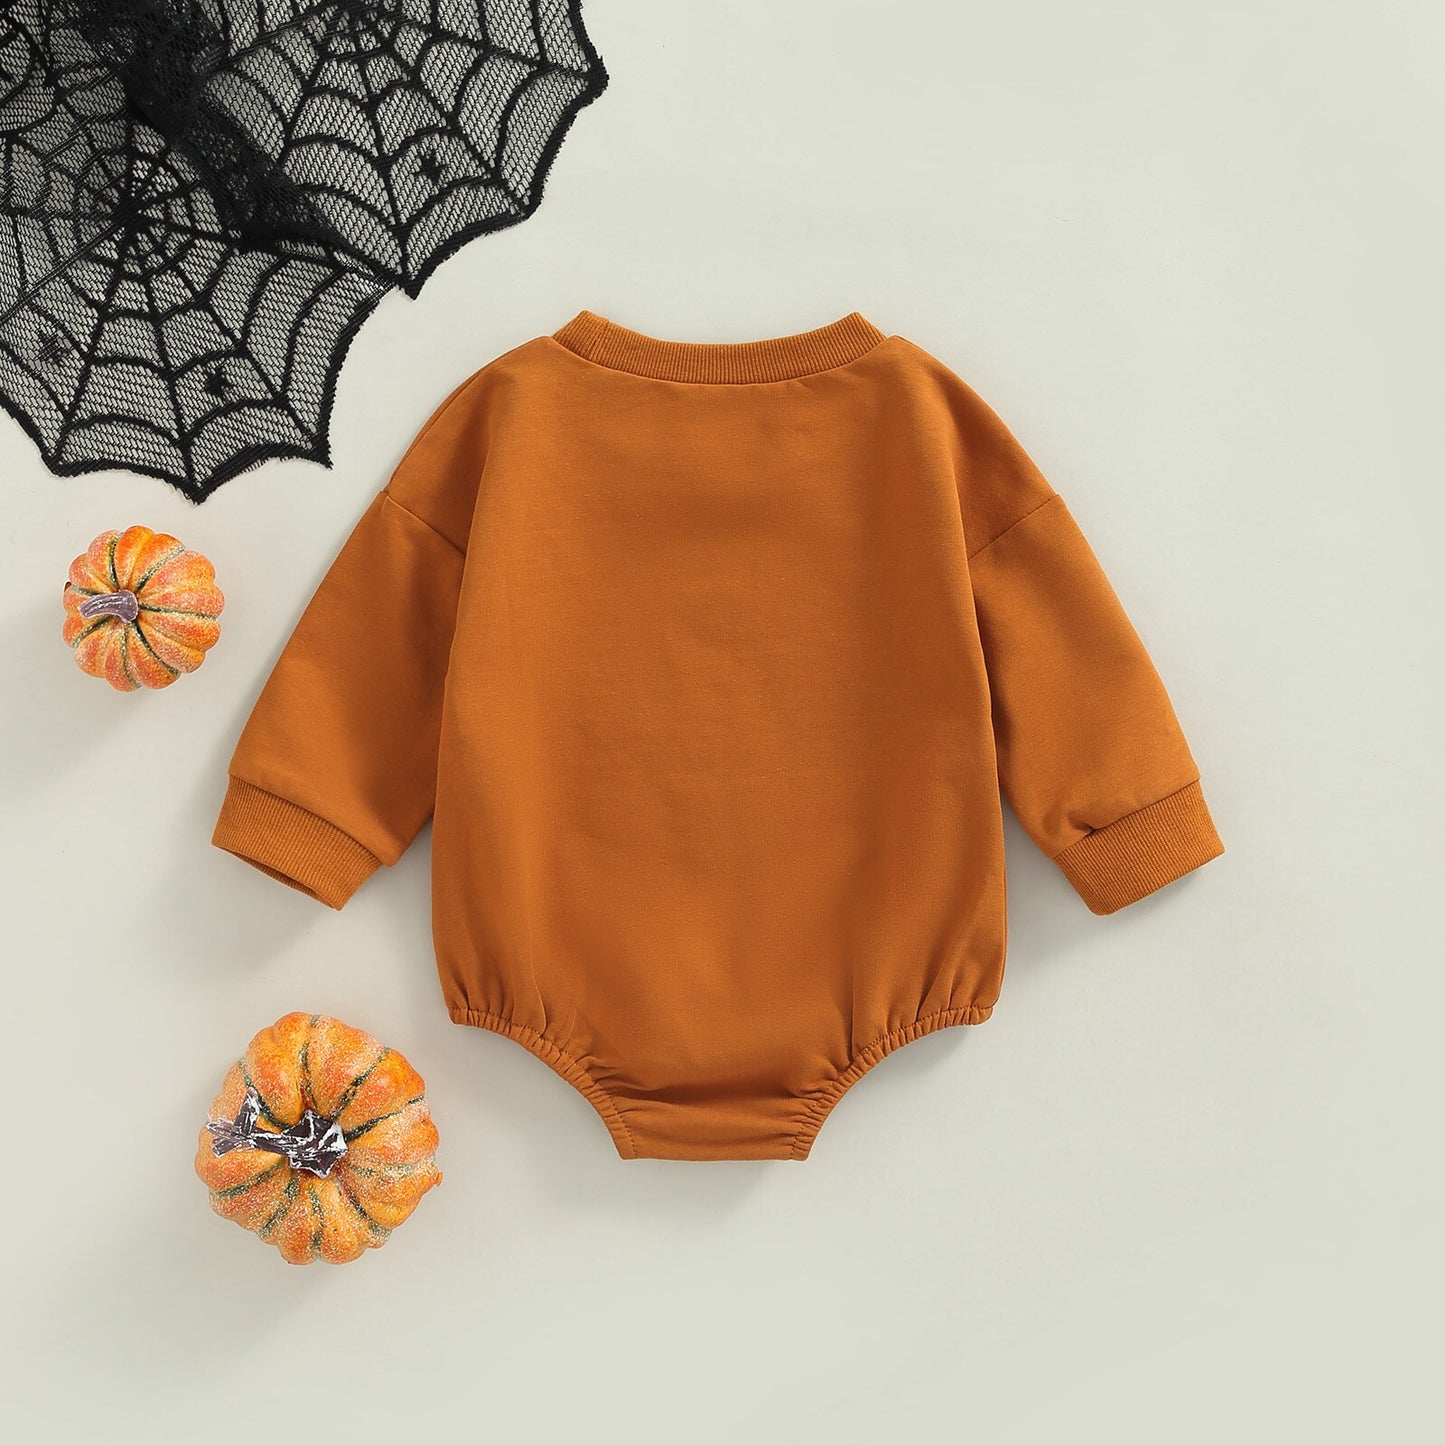 Infant Toddler Unisex Fall Halloween Orange Pumpkin Romper Sweater